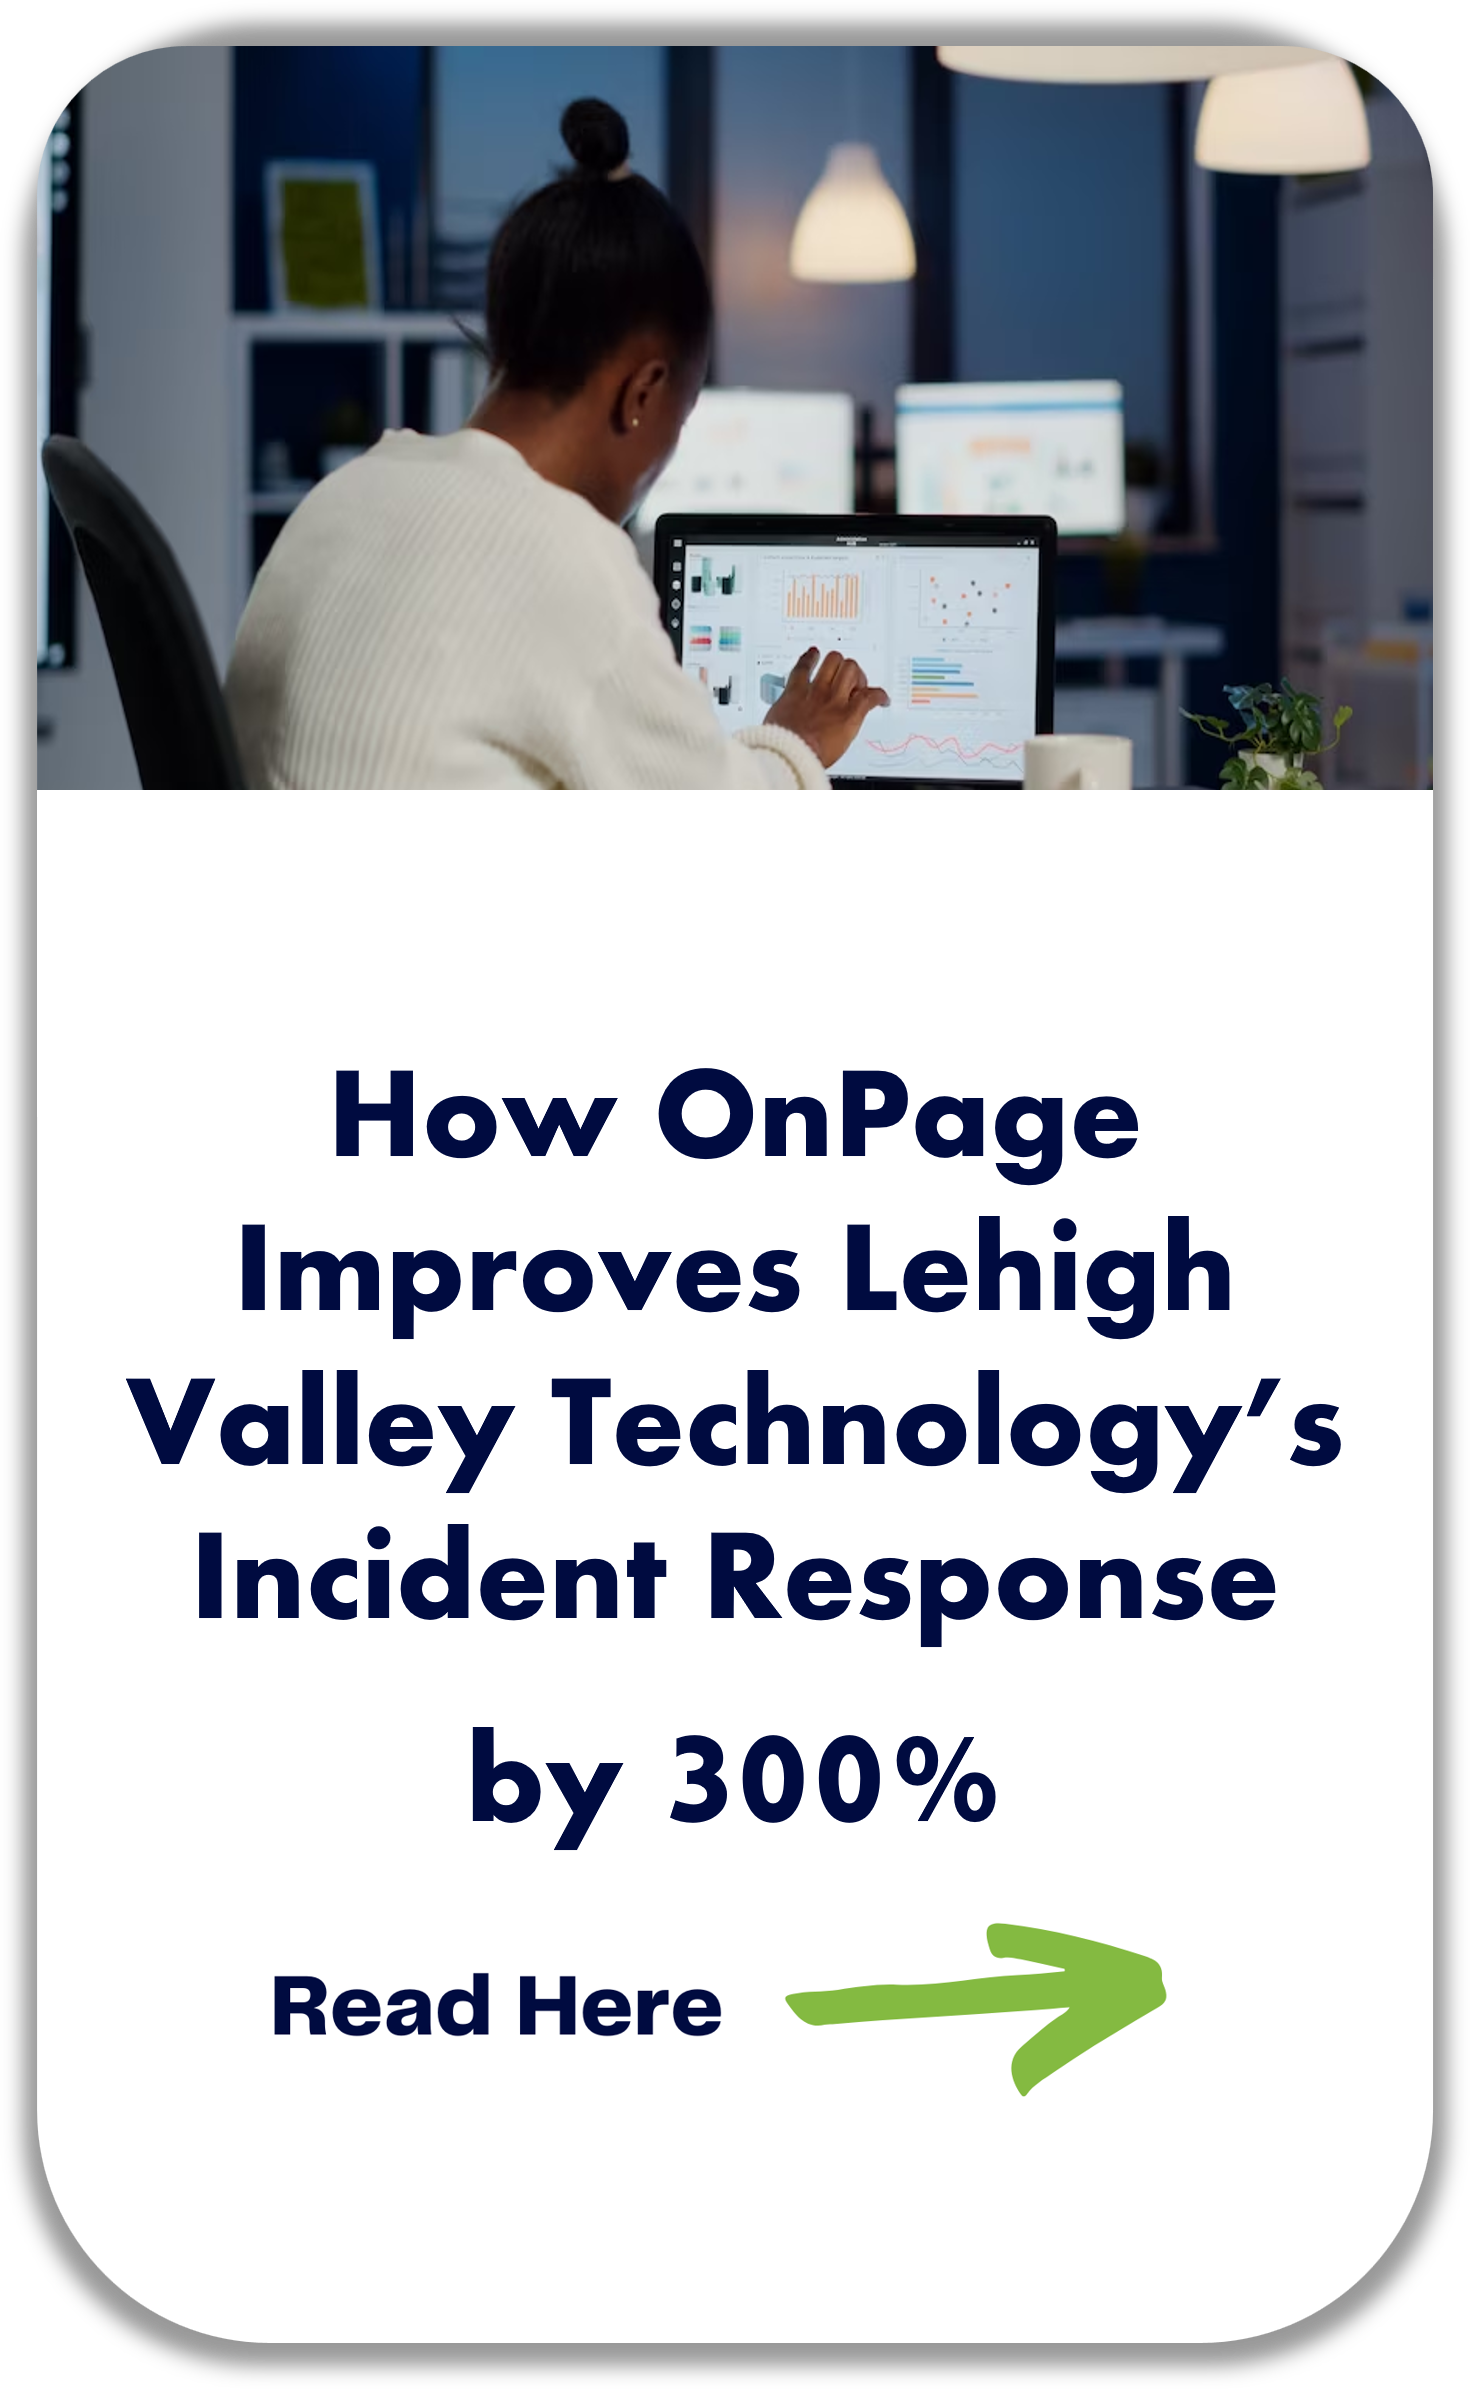 Lehigh Valley Technology